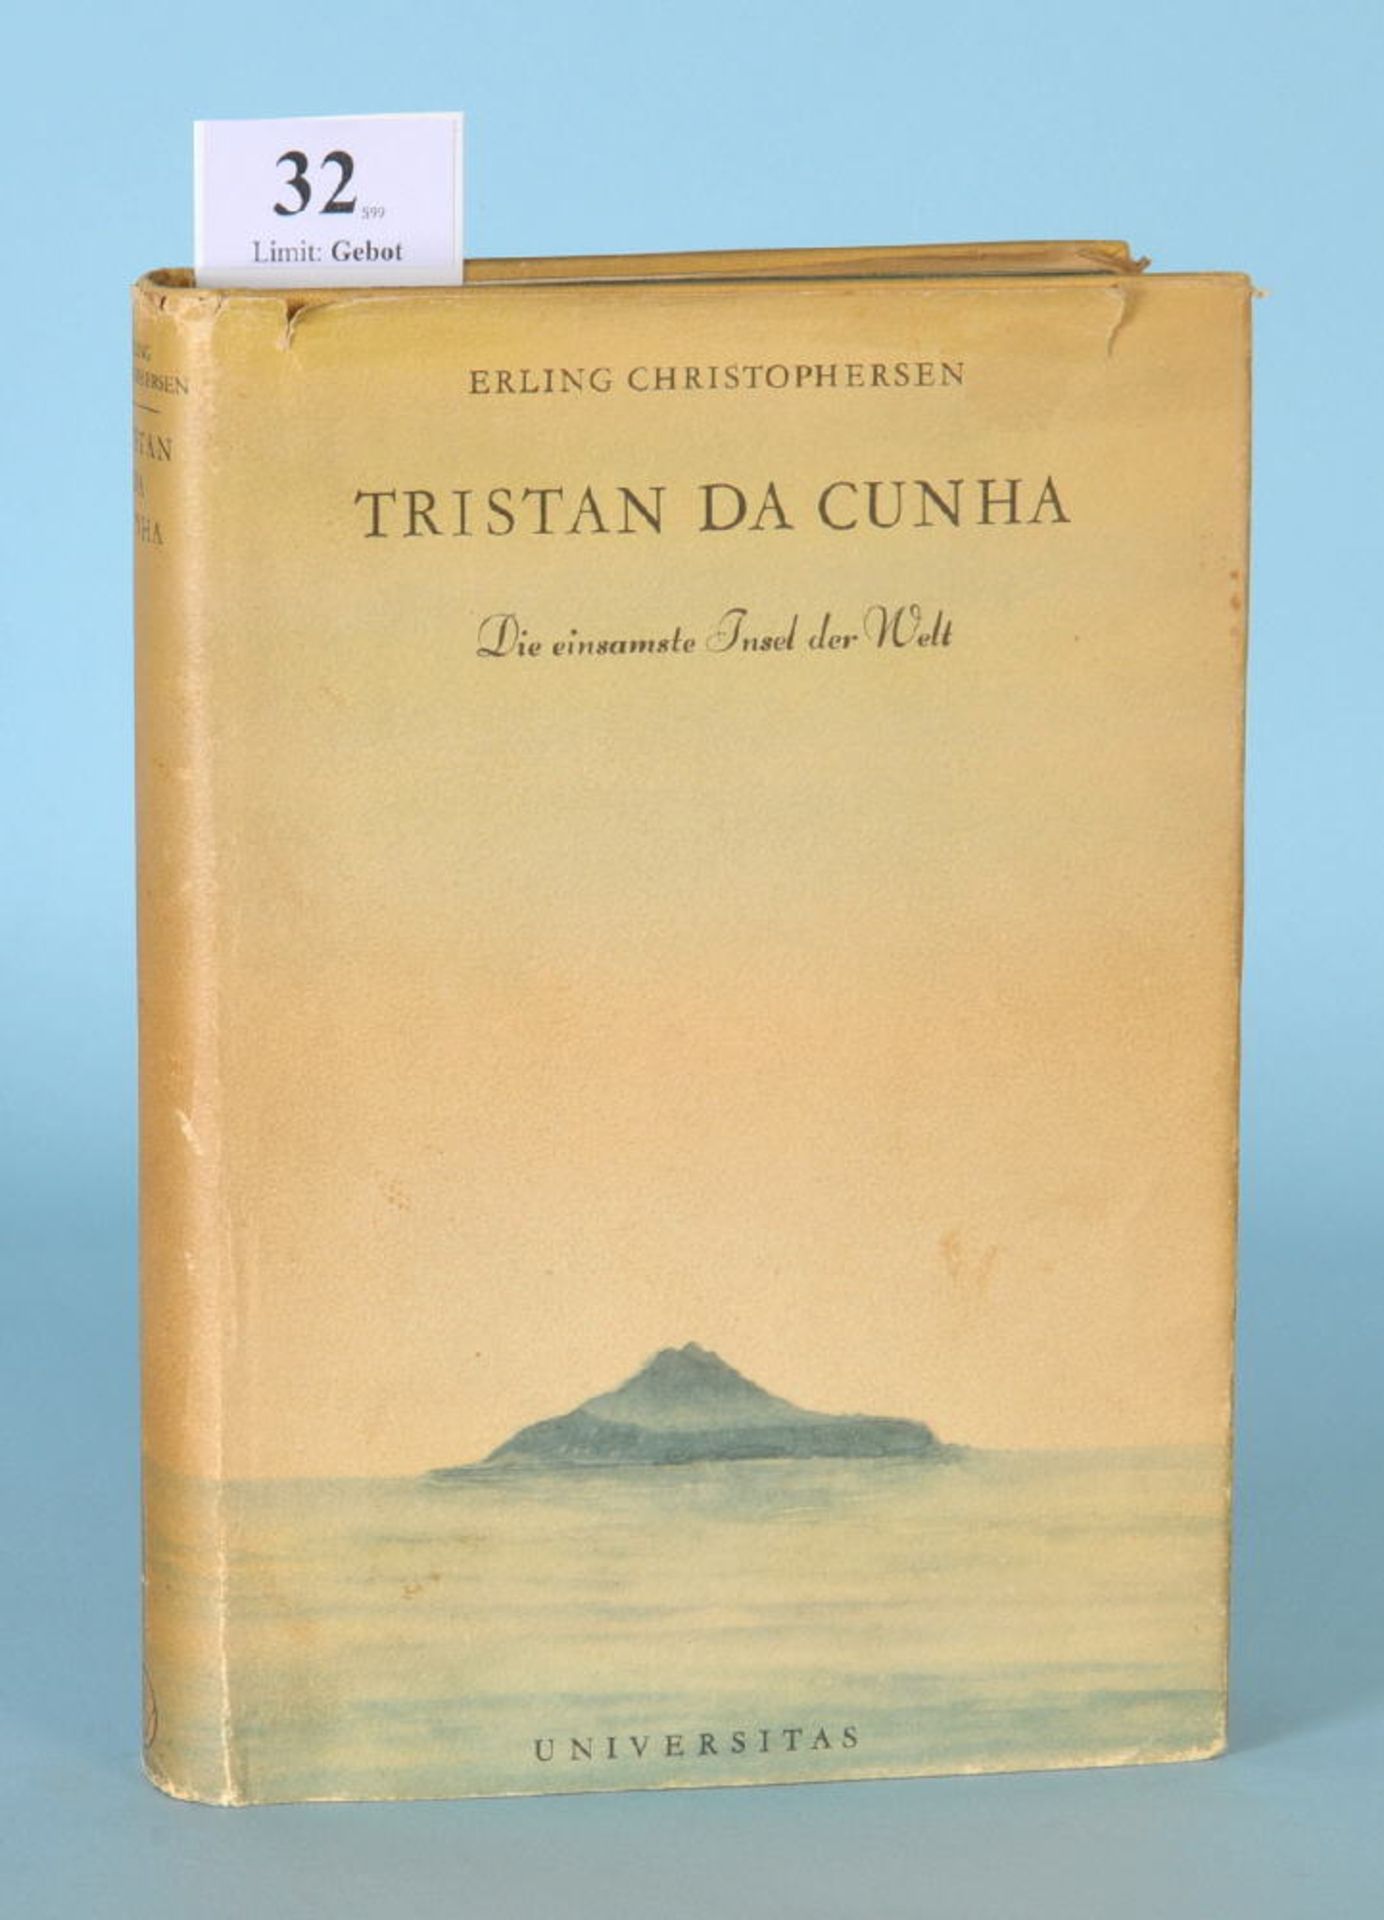 Christophersen, Erling "Tristan da Cunha - Die einsamste...""...Insel der Welt", zahlr. Abb., 214